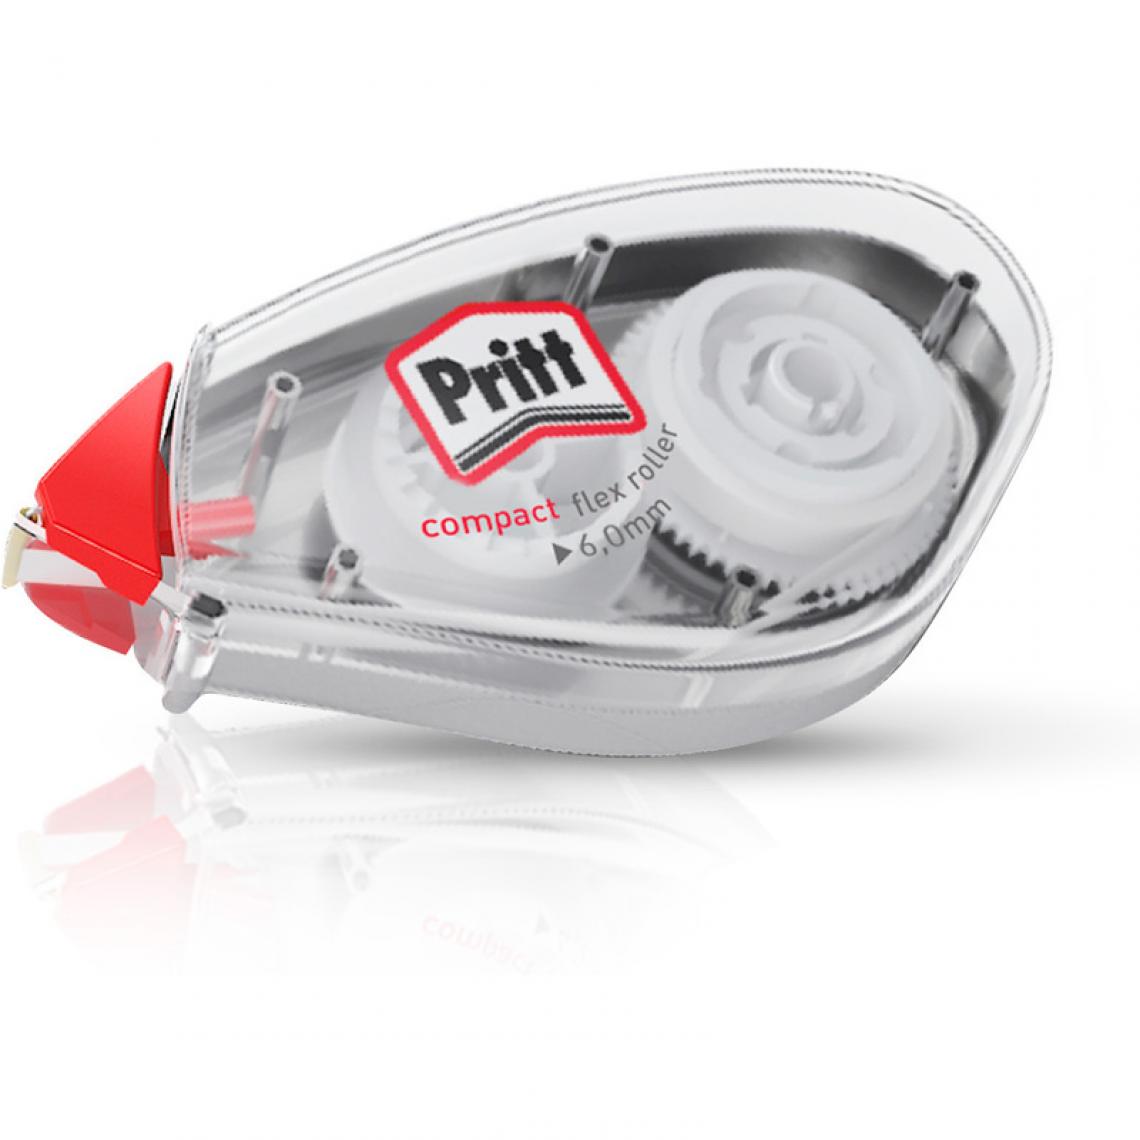 Pritt - Pritt roller correcteur Compact Flex, 6,0 mm x 10,0 m () - Accessoires Bureau